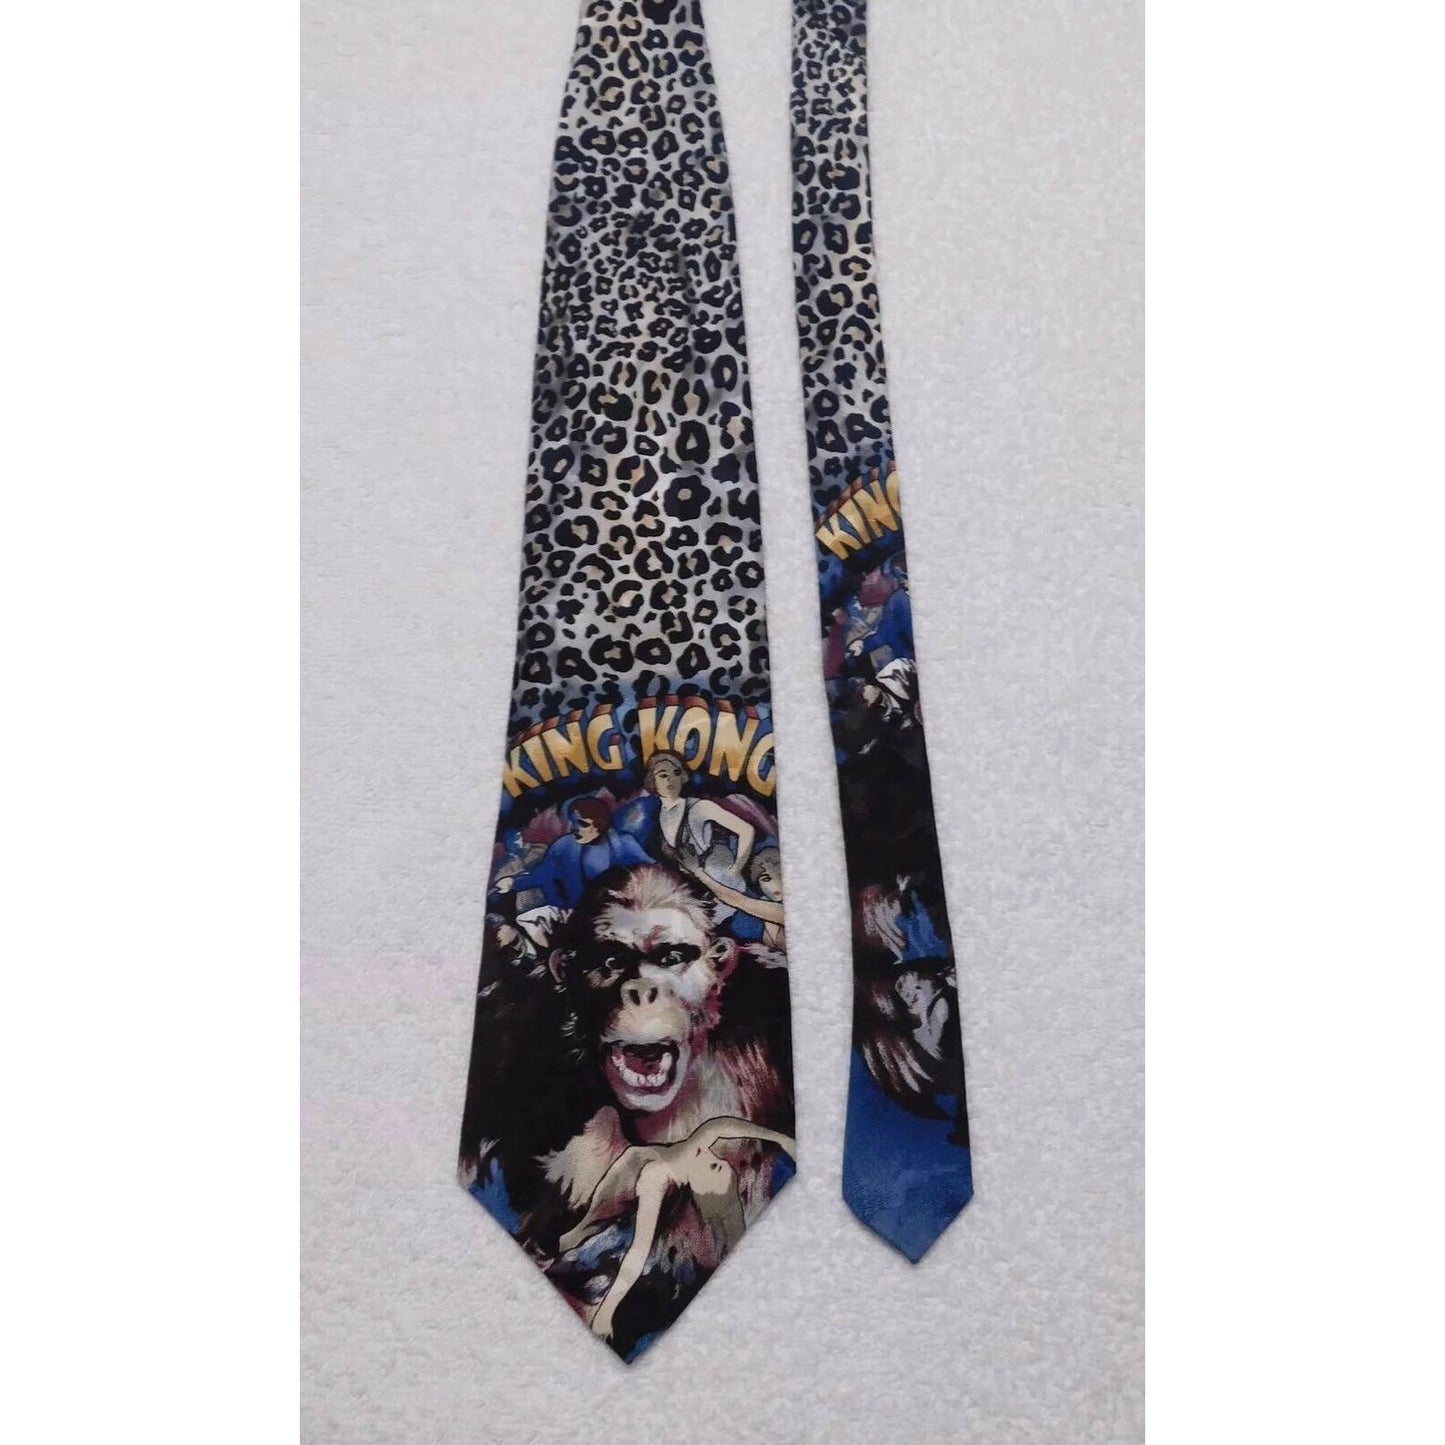 American Film Classics King Kong Vintage Novelty Men's Necktie Tie 100% Silk